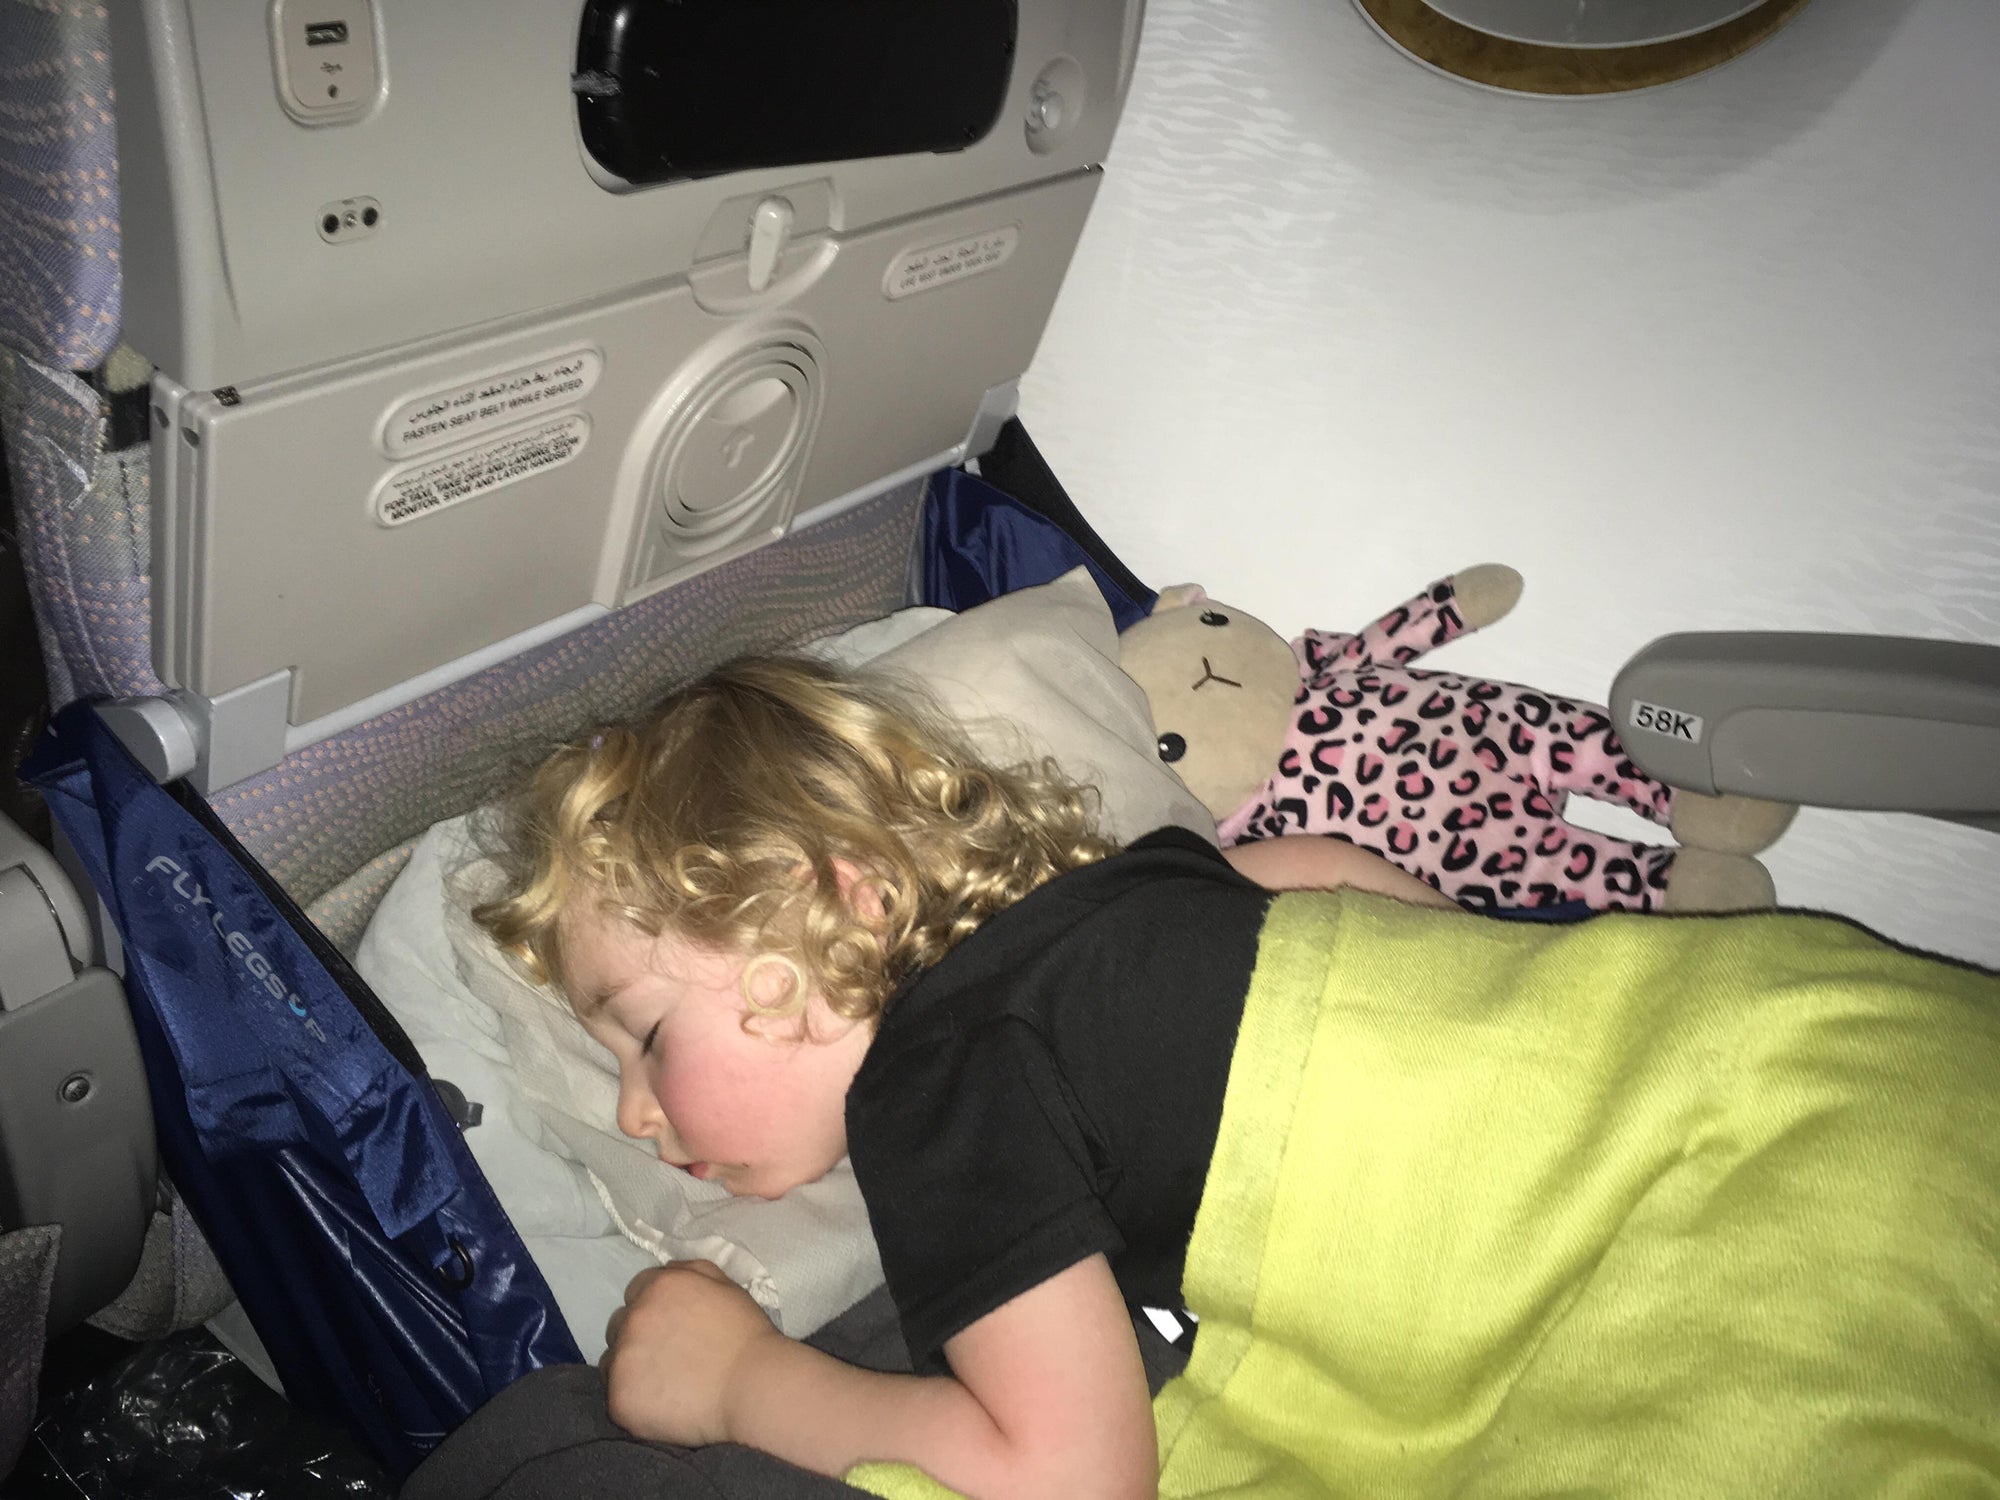 "Won’t sleep in a car...slept on the flights" - Emma, Emirates